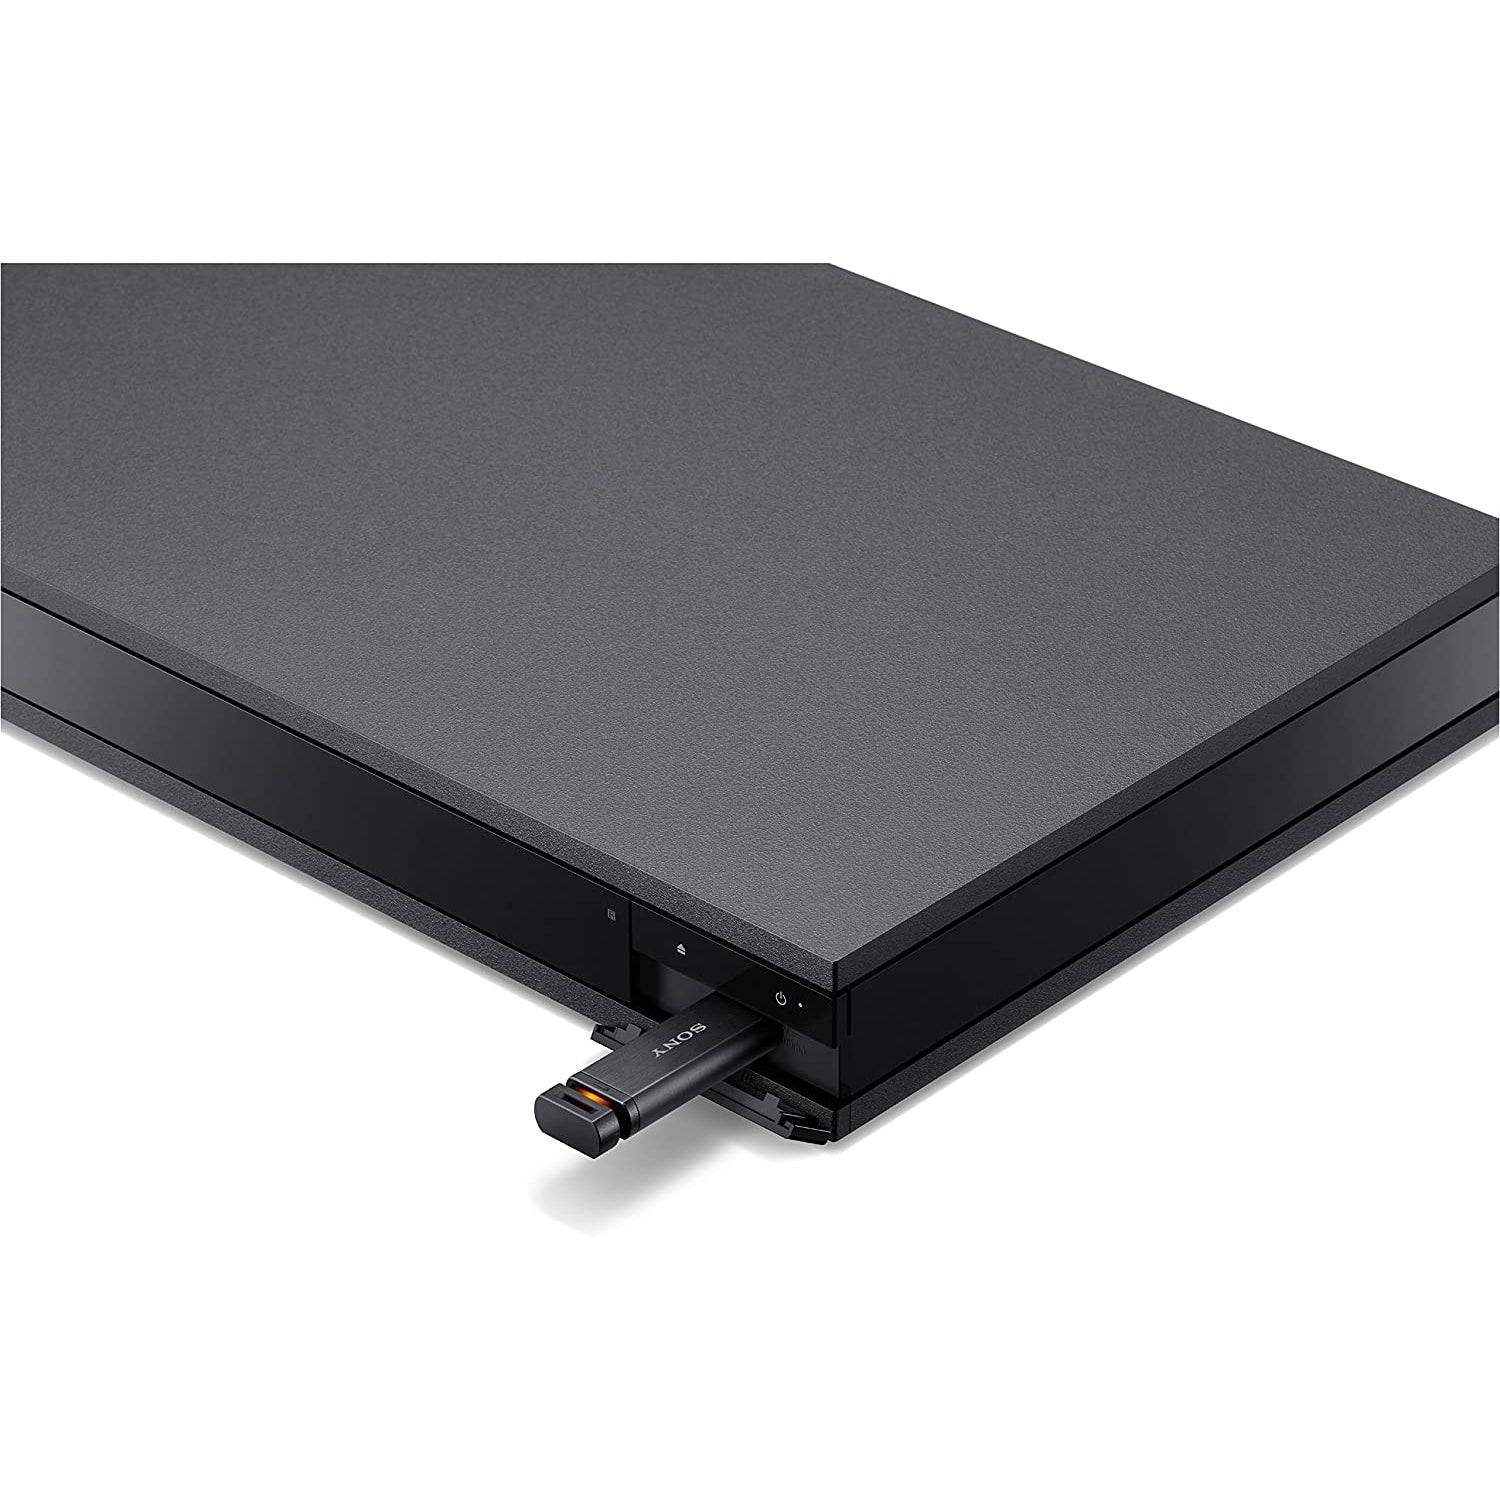 Sony UBP-X800 Ultra HD Blu-Ray Player - Black